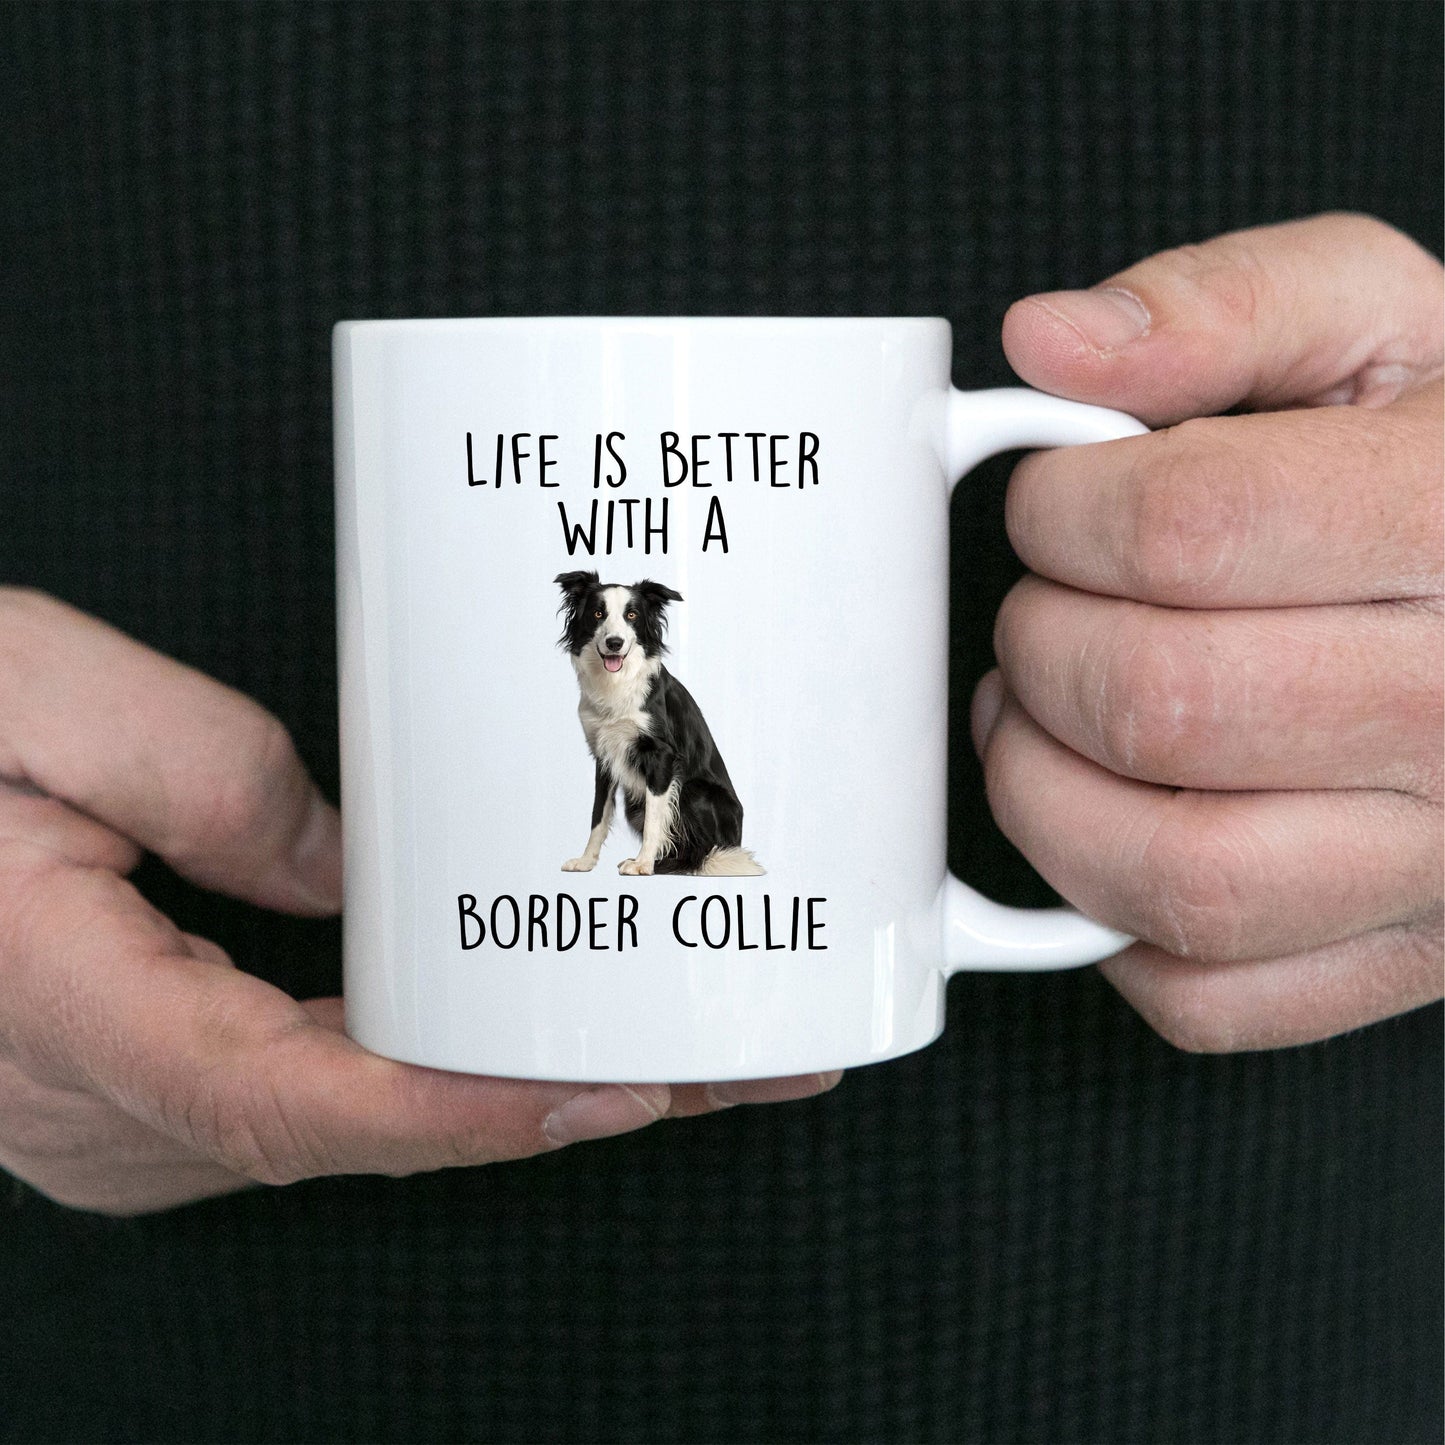 Border Collie Dog Ceramic Coffee Mug - Life is Better